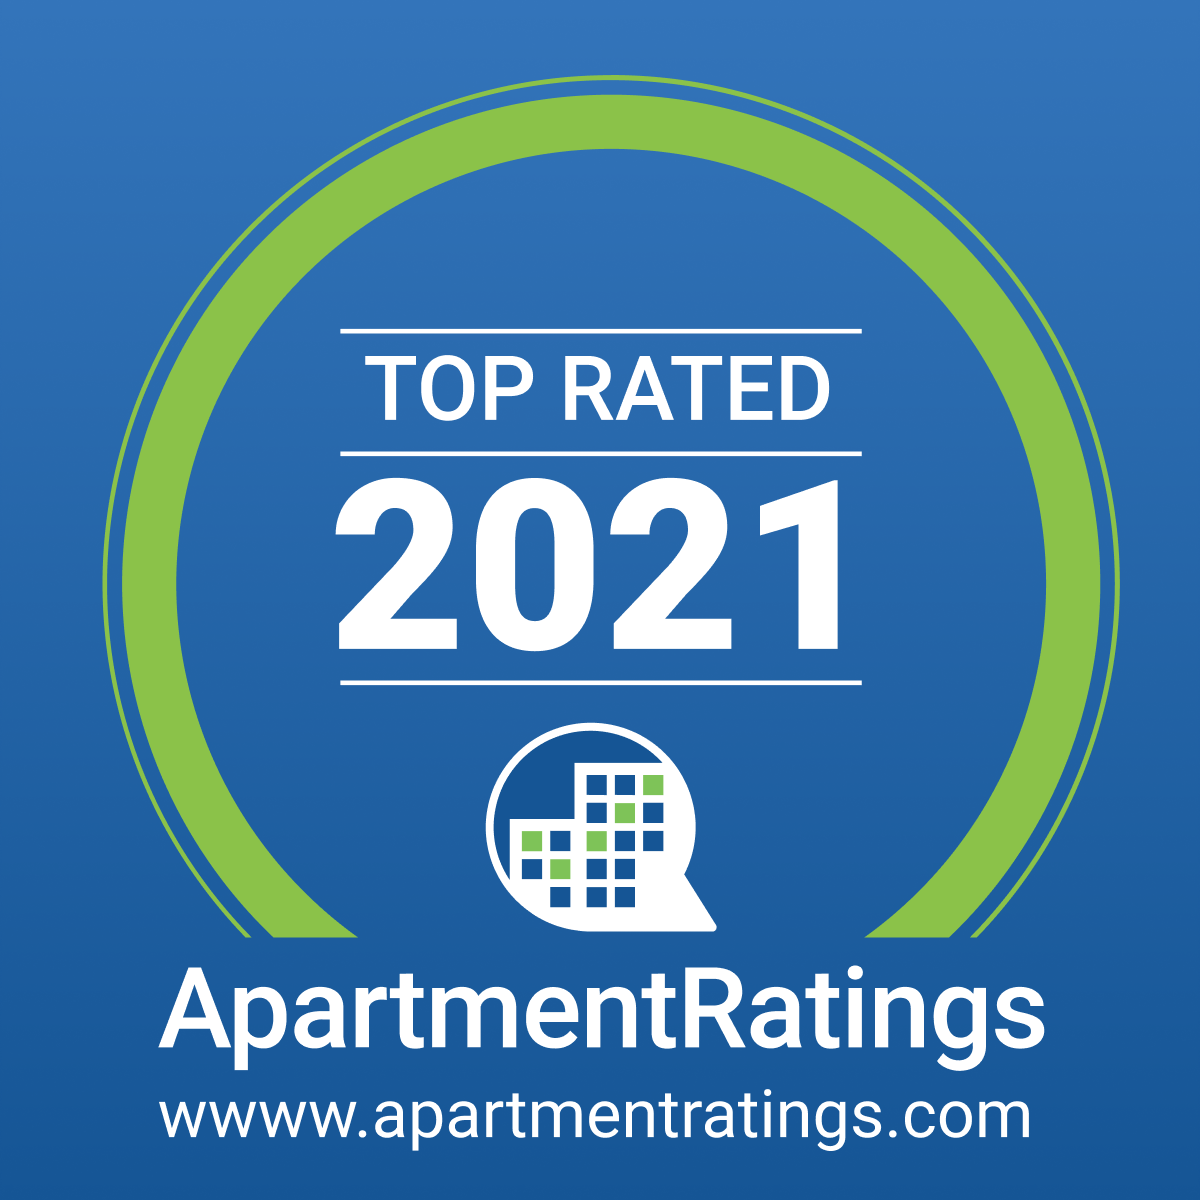 ApartmentRatings 2021 Top Rated Awards Logo